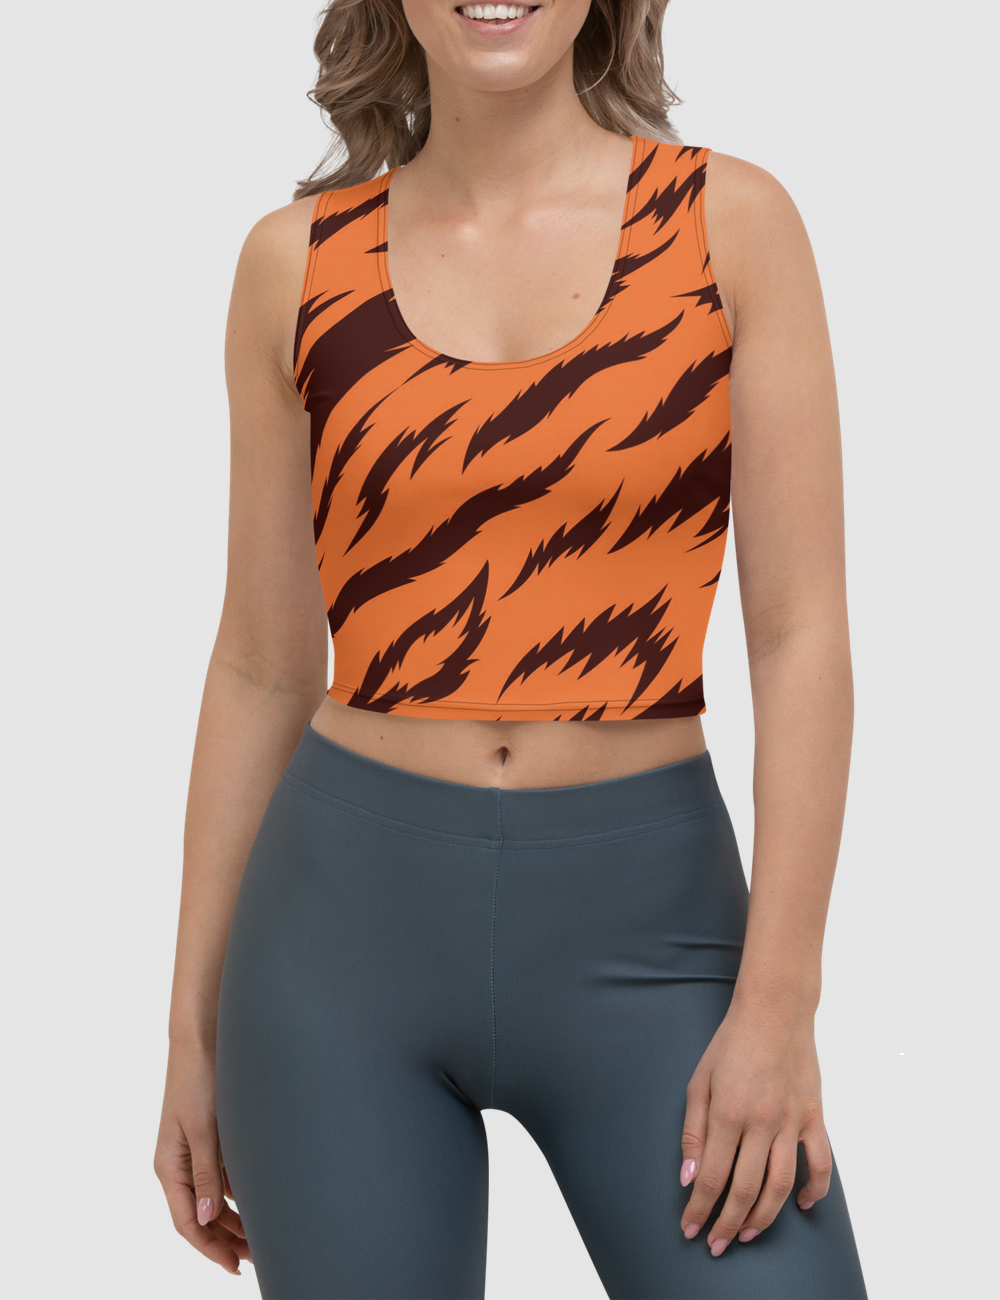 Orange Tiger | Women's Sleeveless Fitted Crop Top OniTakai